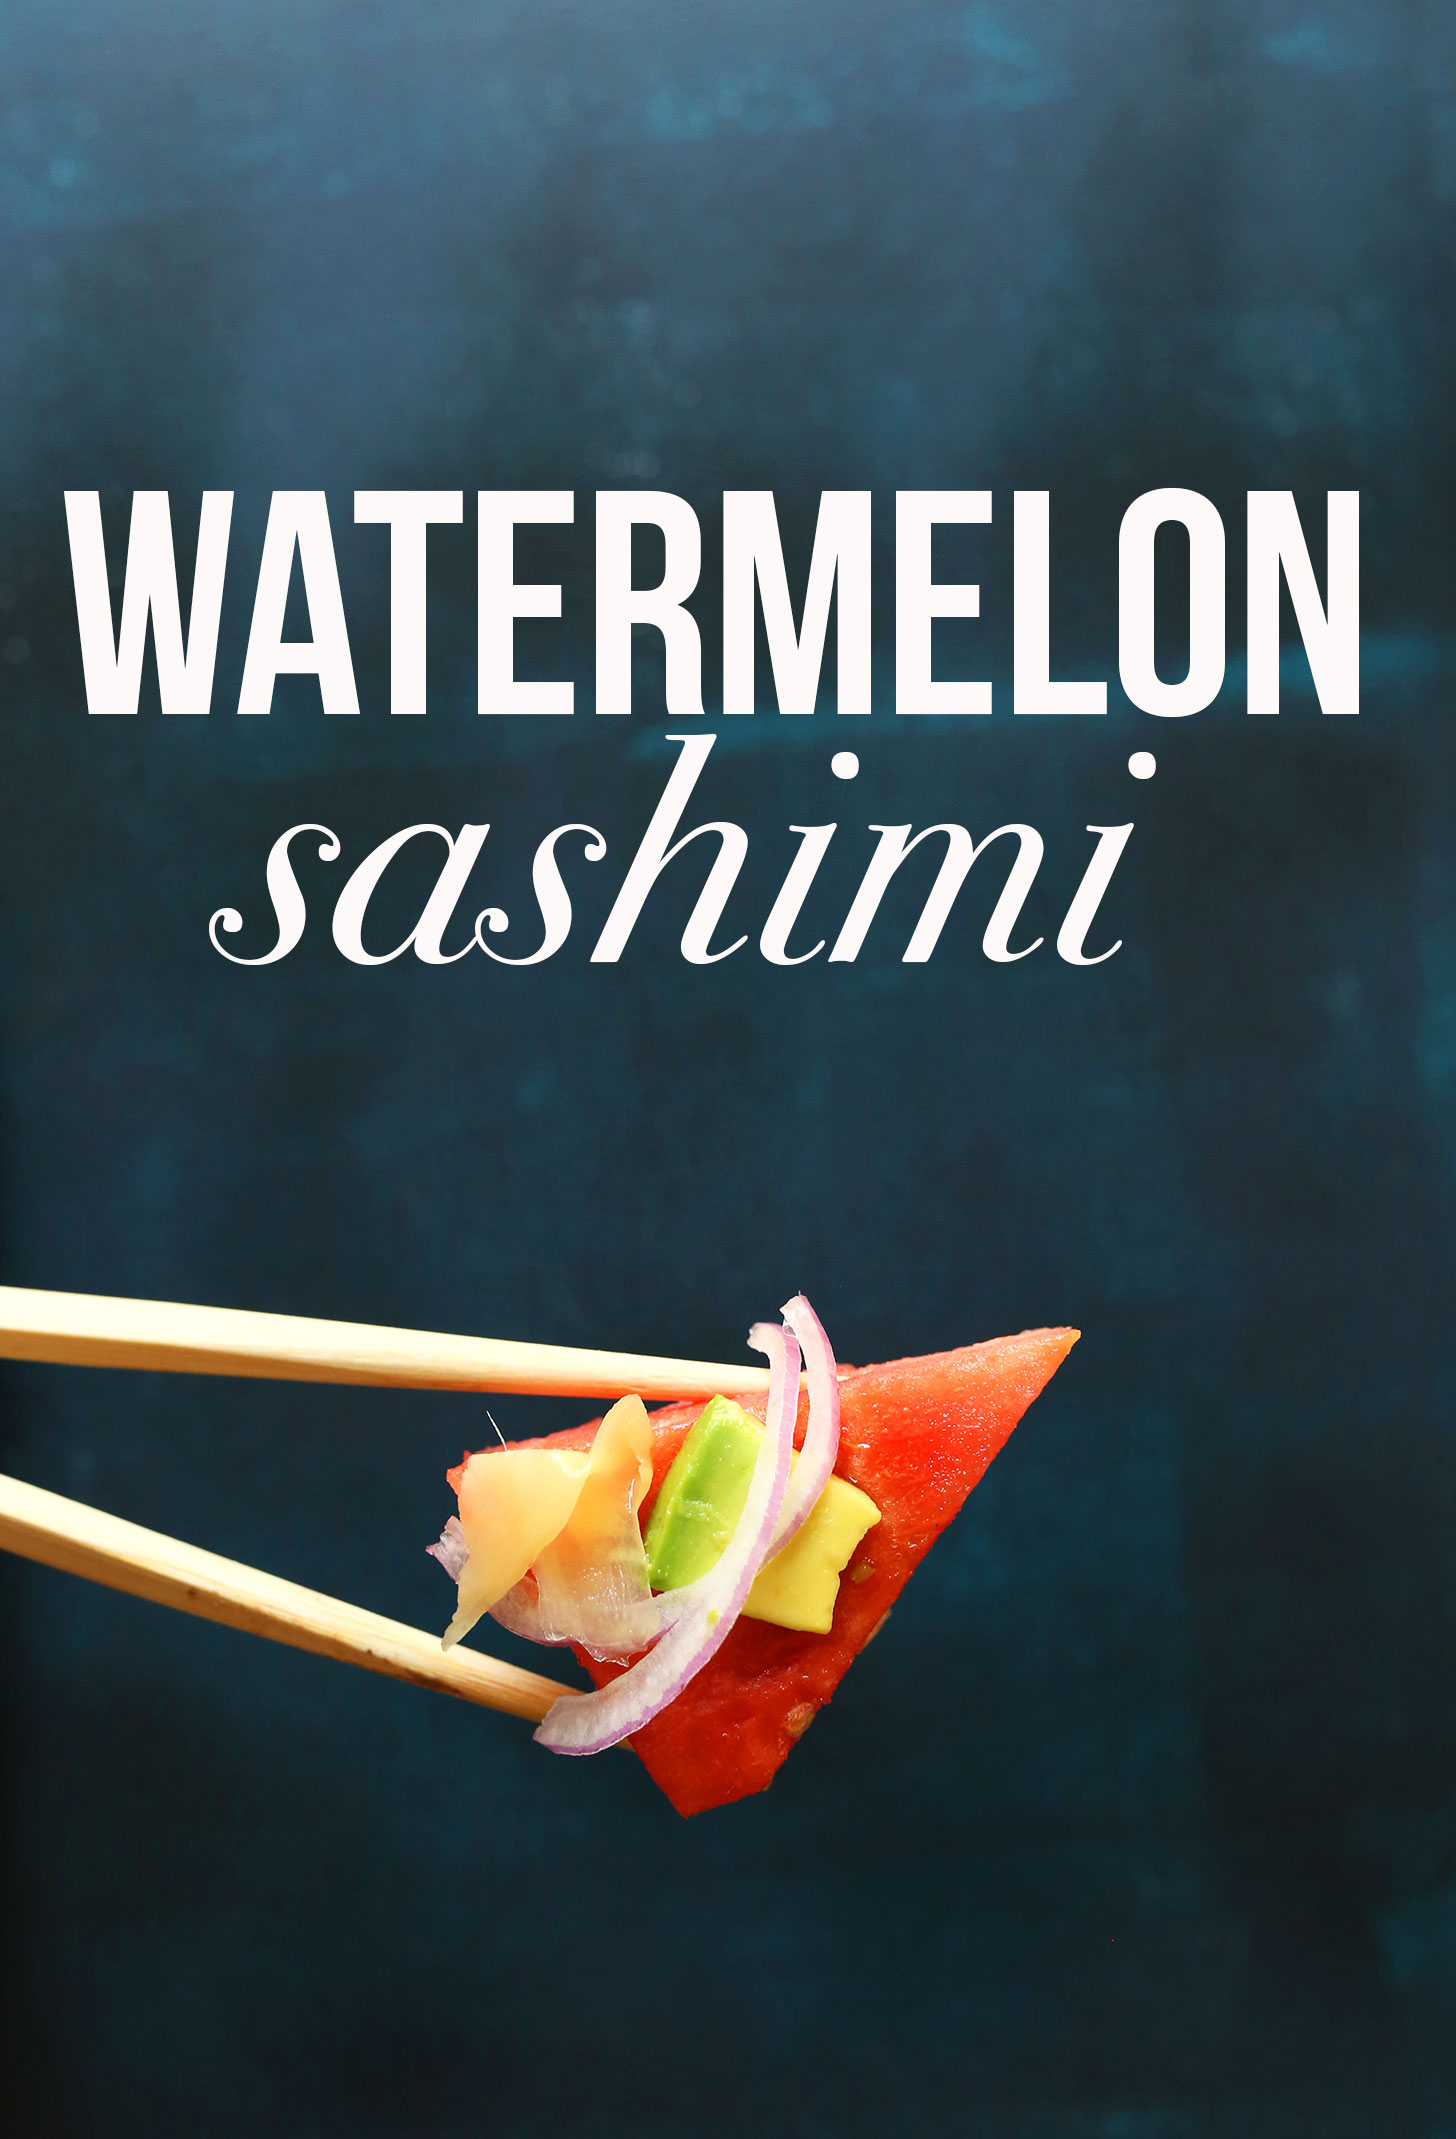 Watermelon-sashimi-10-minutes-so-fresh-and-flavorul-the-perfect-plantbased-appetizer-or-snack-vegan-sashimi-watermelon-recipe-minimalistbaker